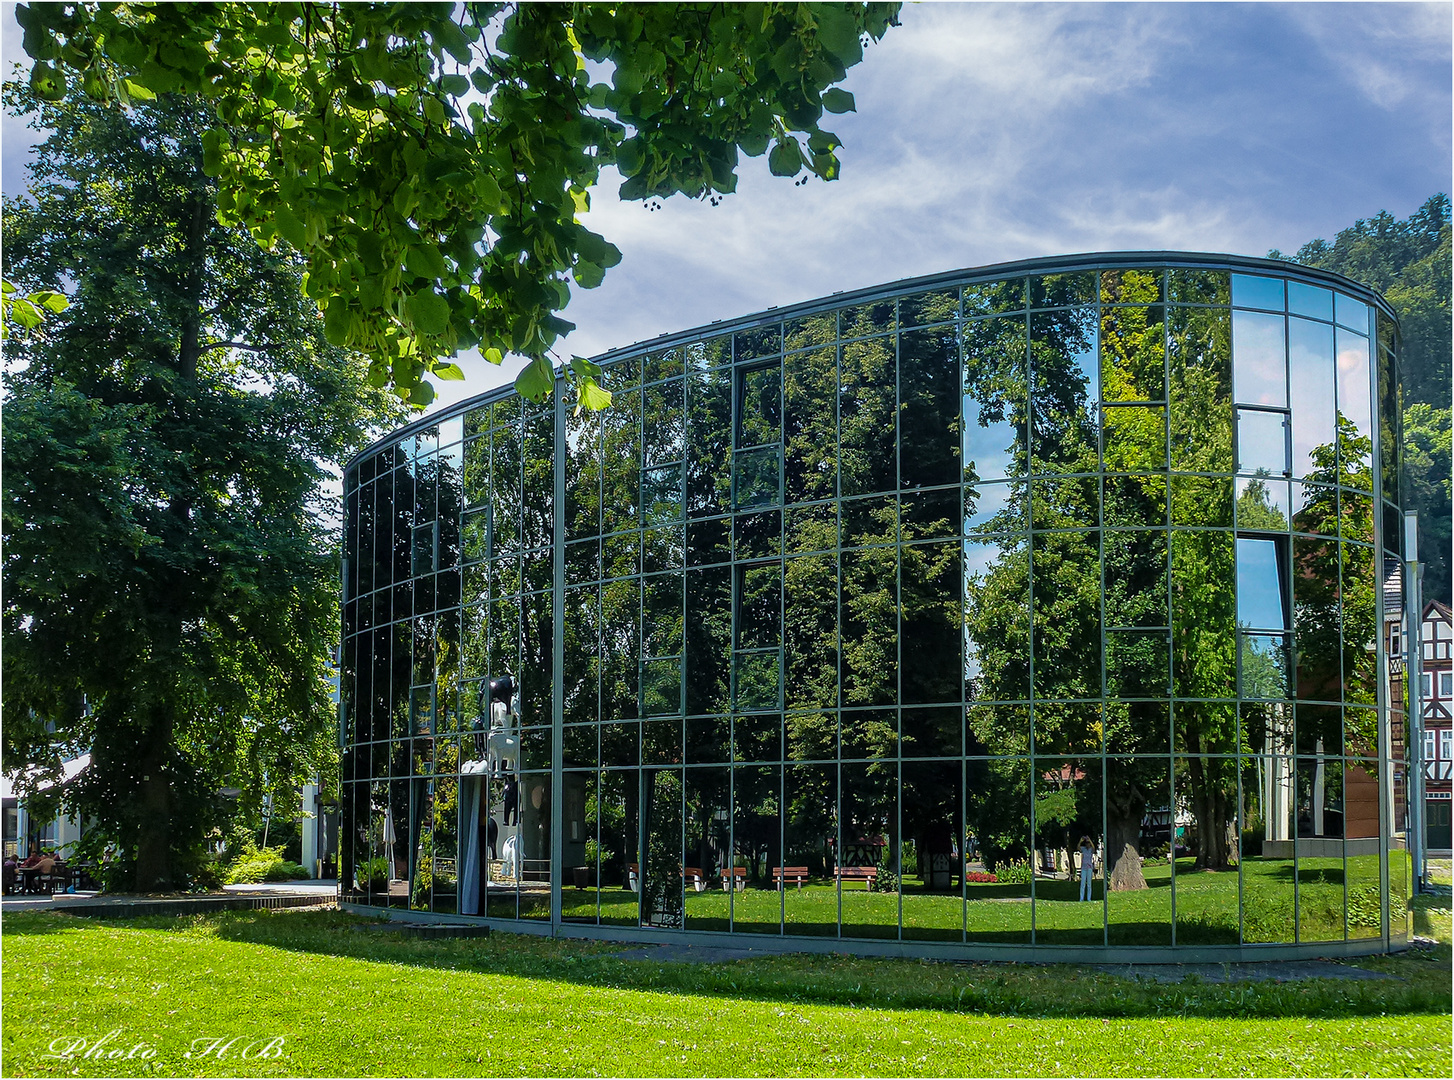 Glaspavillon im Kurpark Bad Soden Allendorf